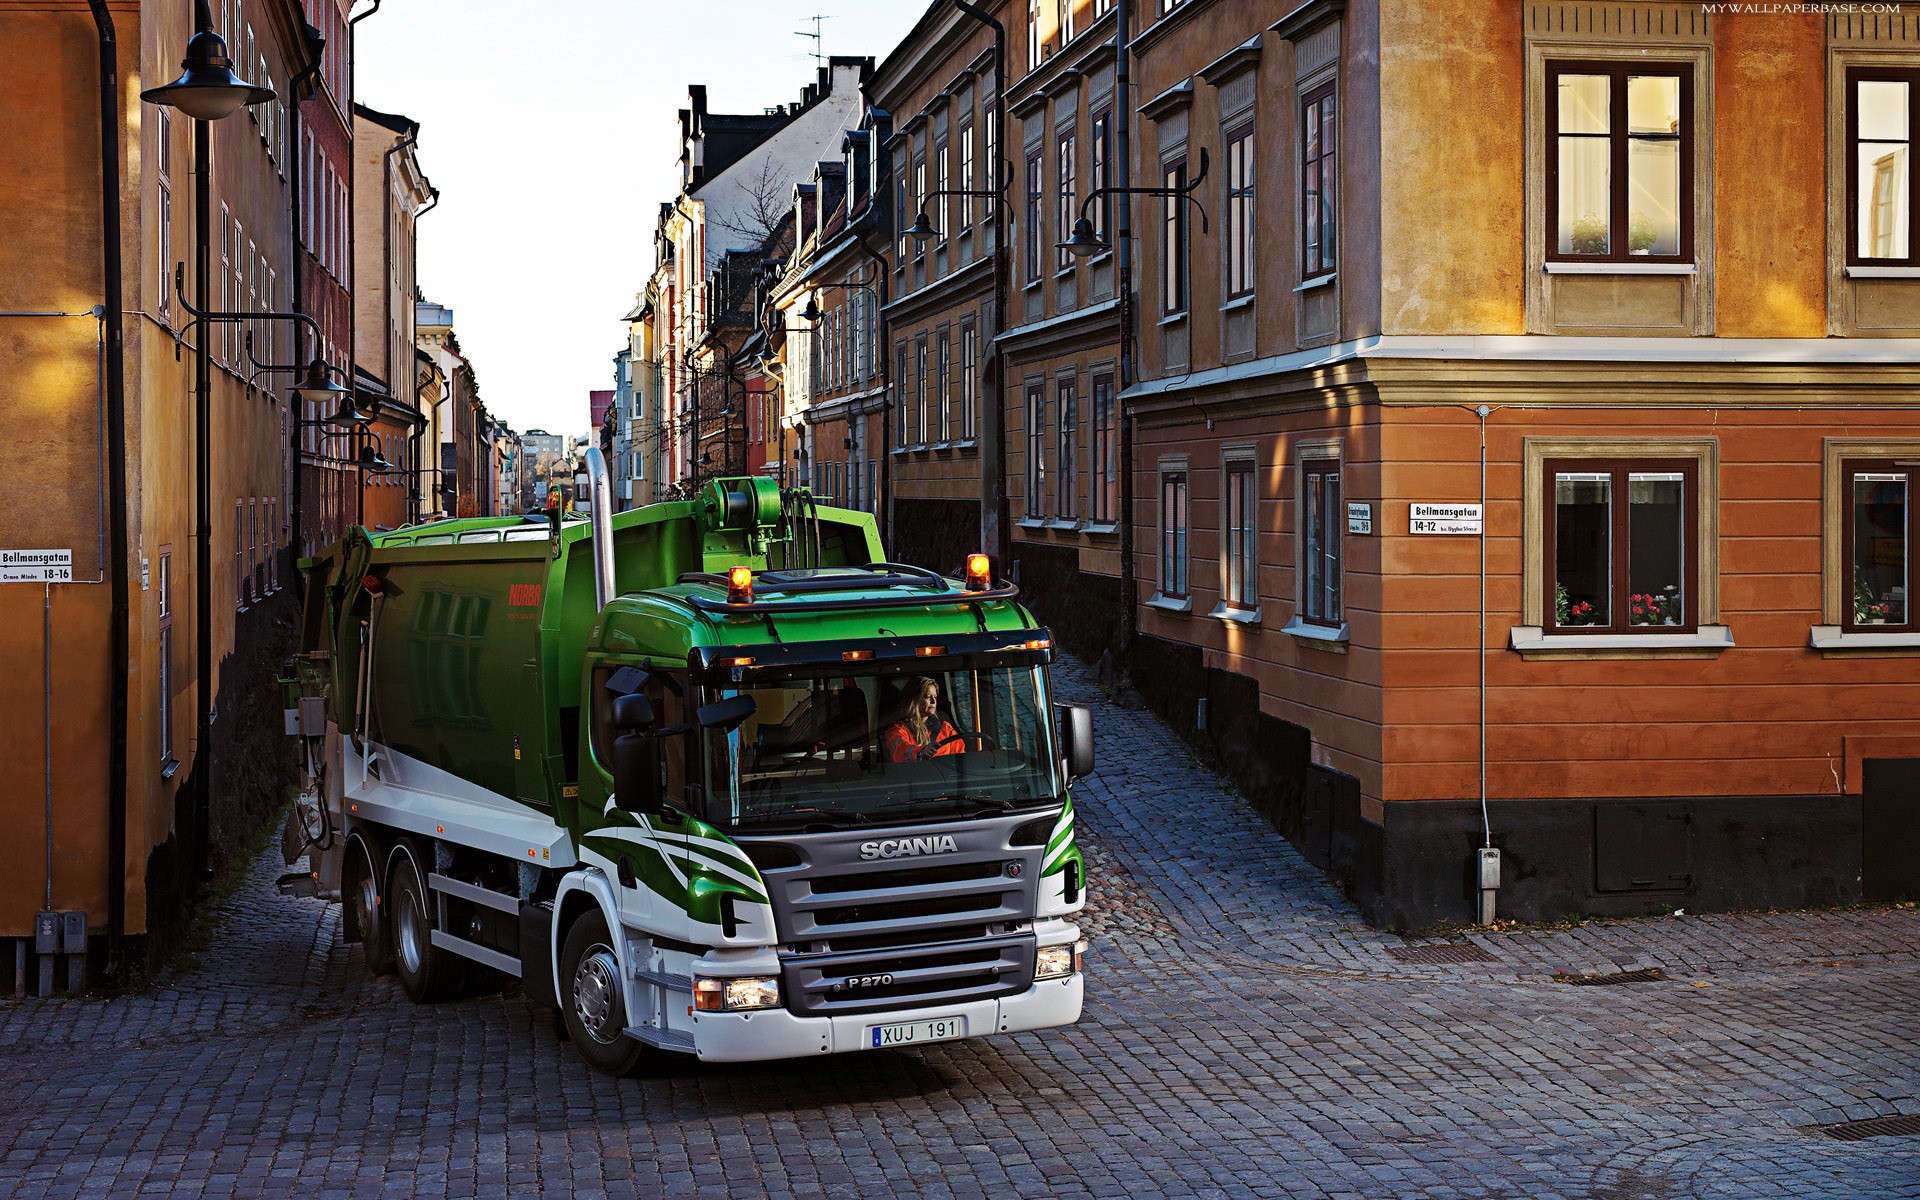 Fotos von Scania Lastkraftwagen auto Autos automobil